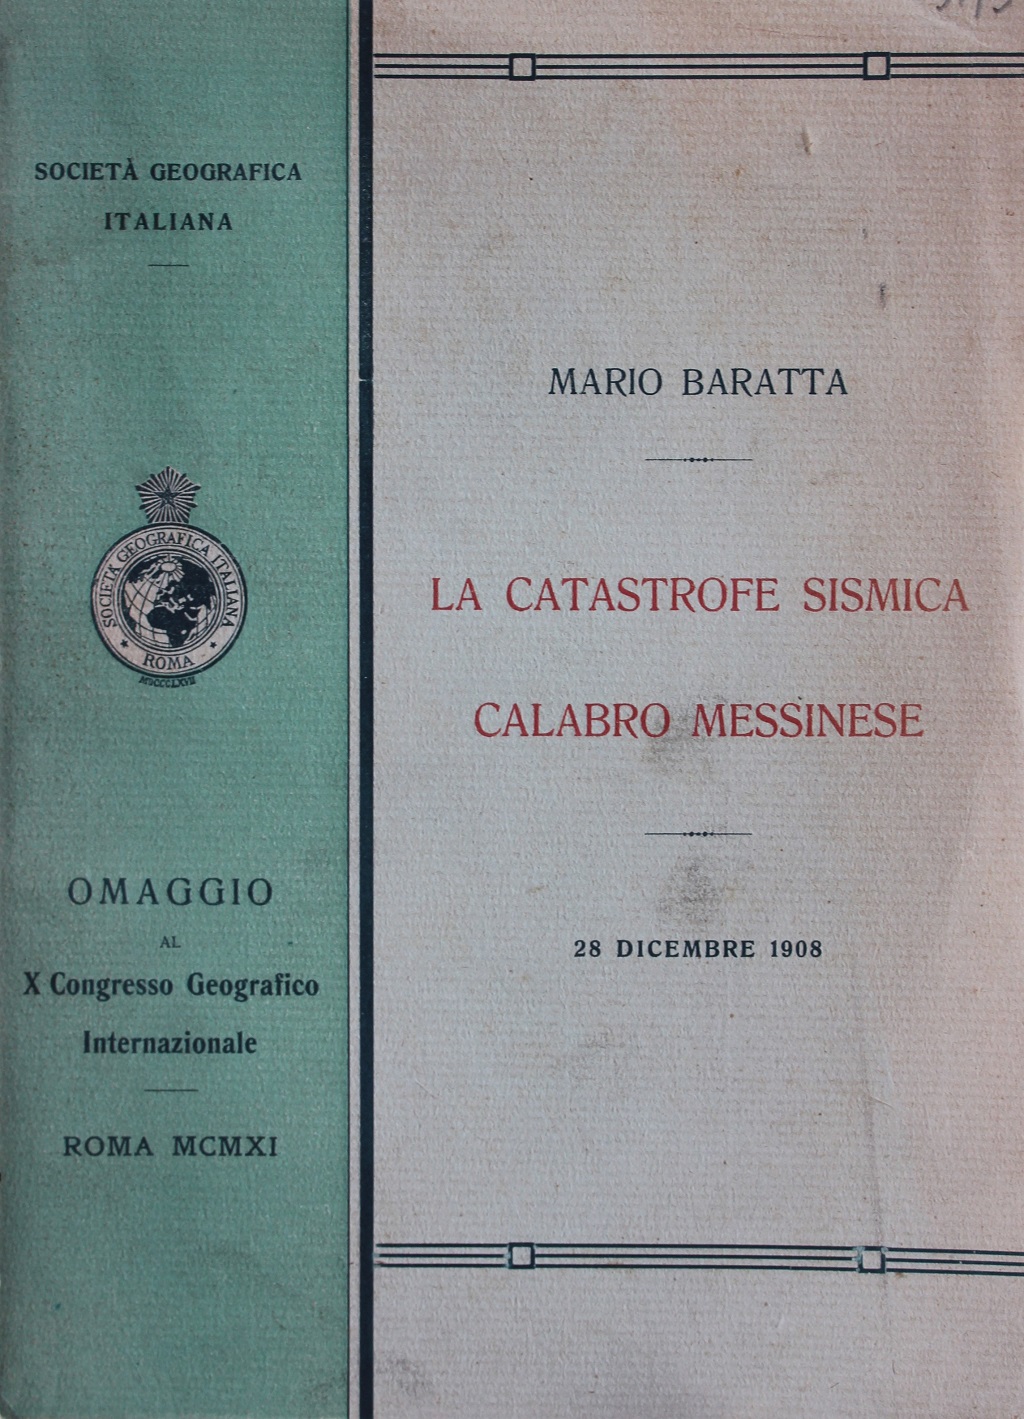 150° anniversario della nascita del sismologo Mario Baratta